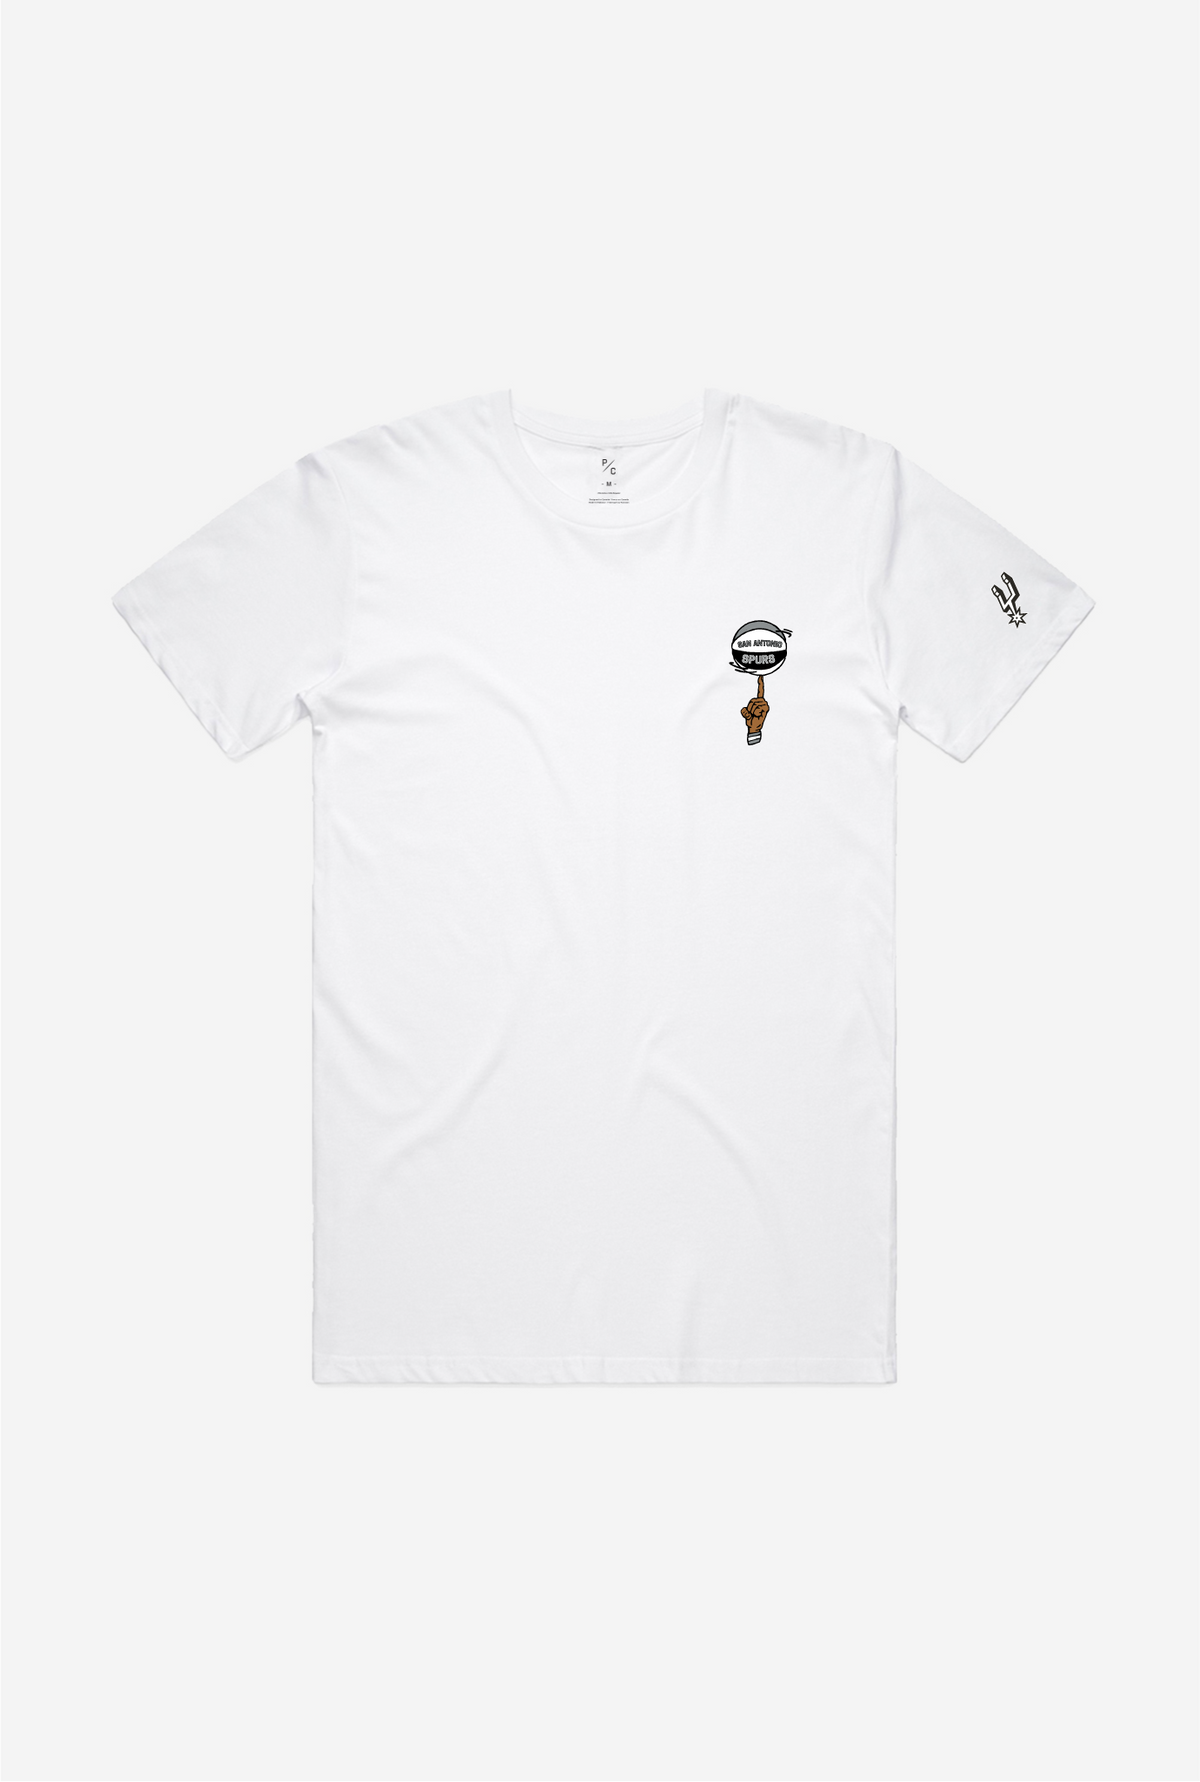 San Antonio Spurs Spinning Ball T-Shirt - White